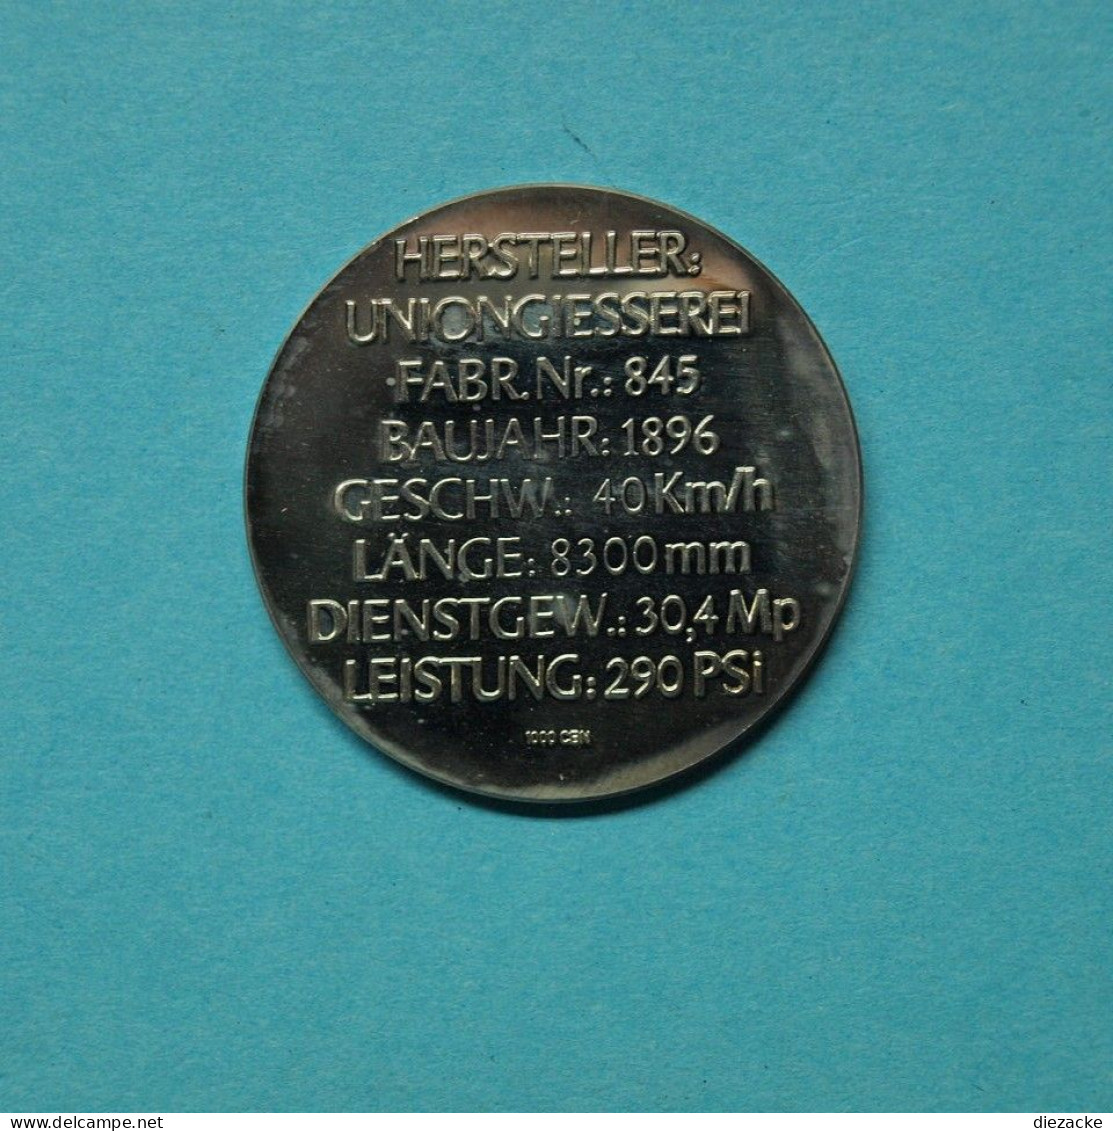 Medaille Preussische Staatsbahn 1705 Hannover T 3 PP (M5383 - Non Classés